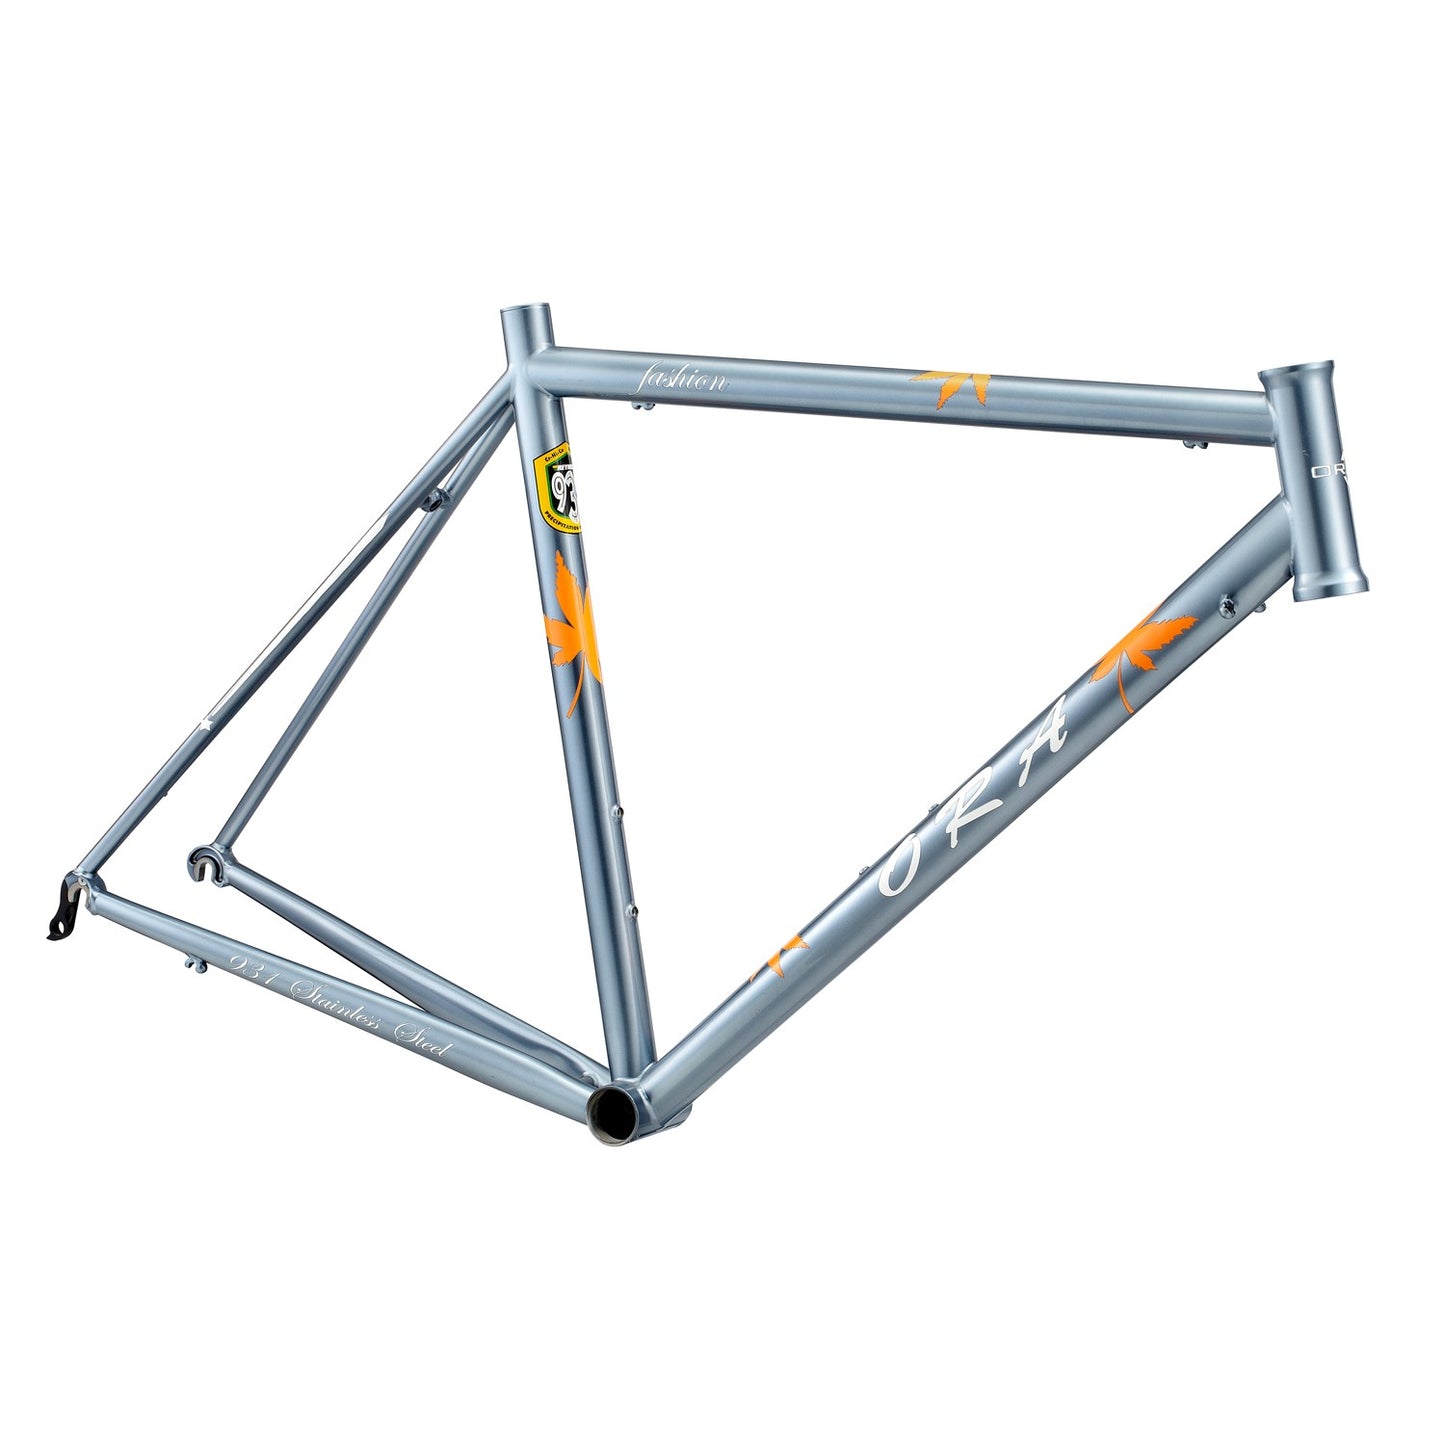 Stainless Steel Road Bike Frame 23-RA-902